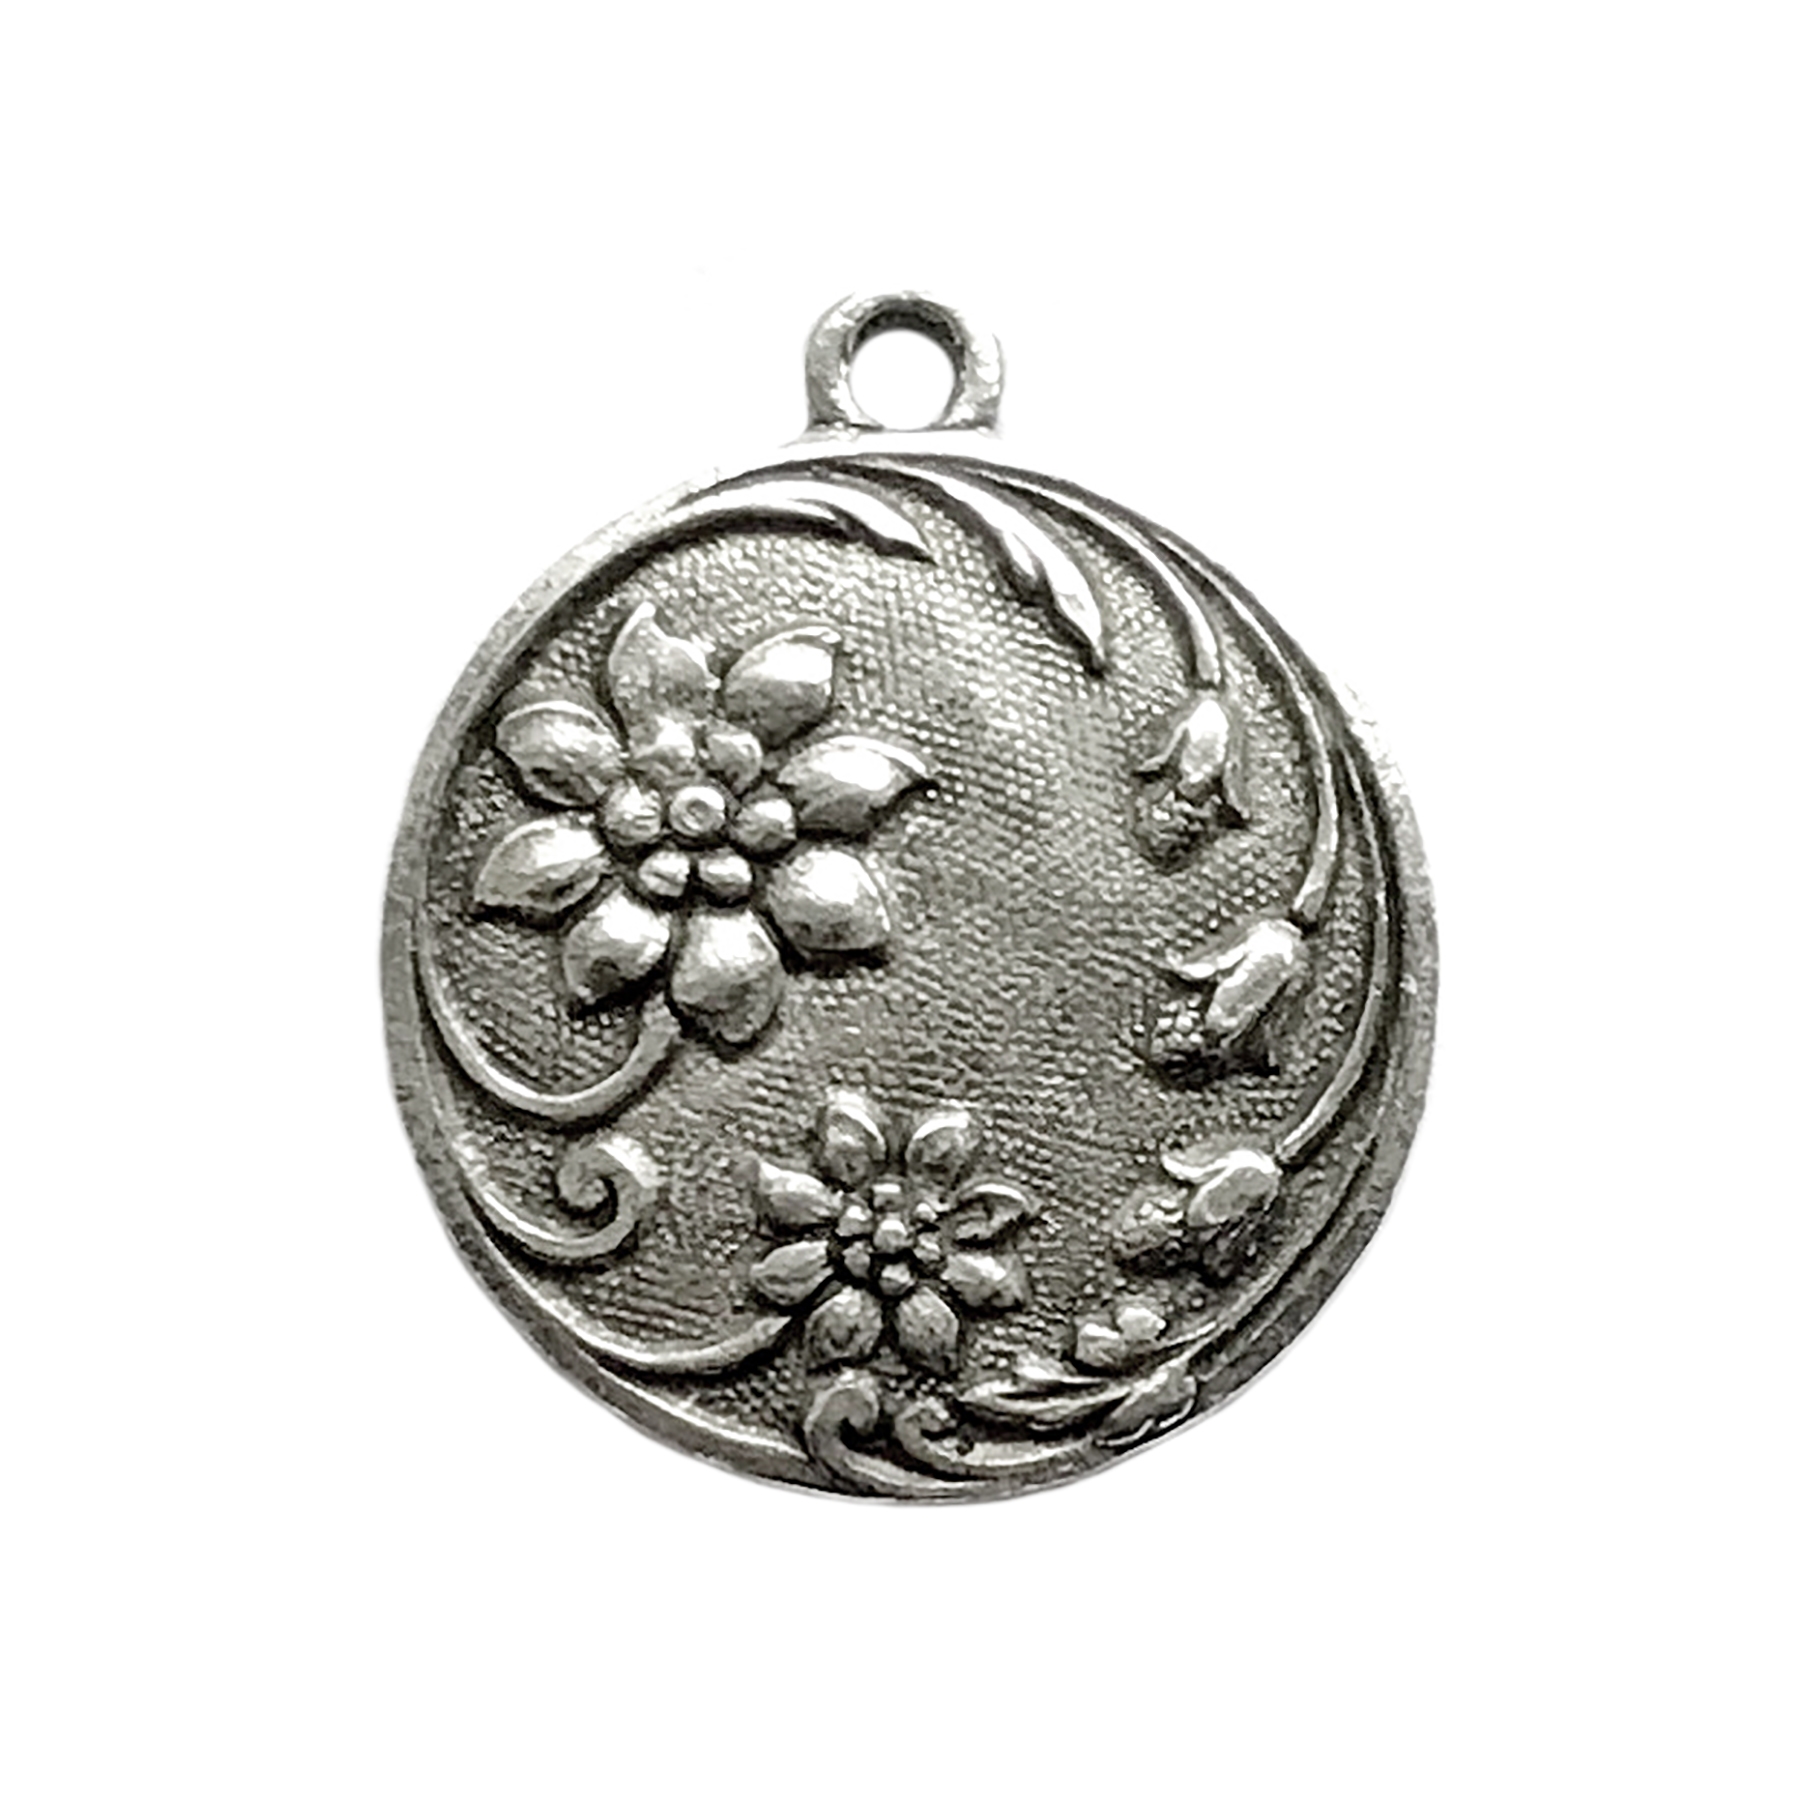 old silver pewter, floral pendant, 02250, antique copper, vintage, B